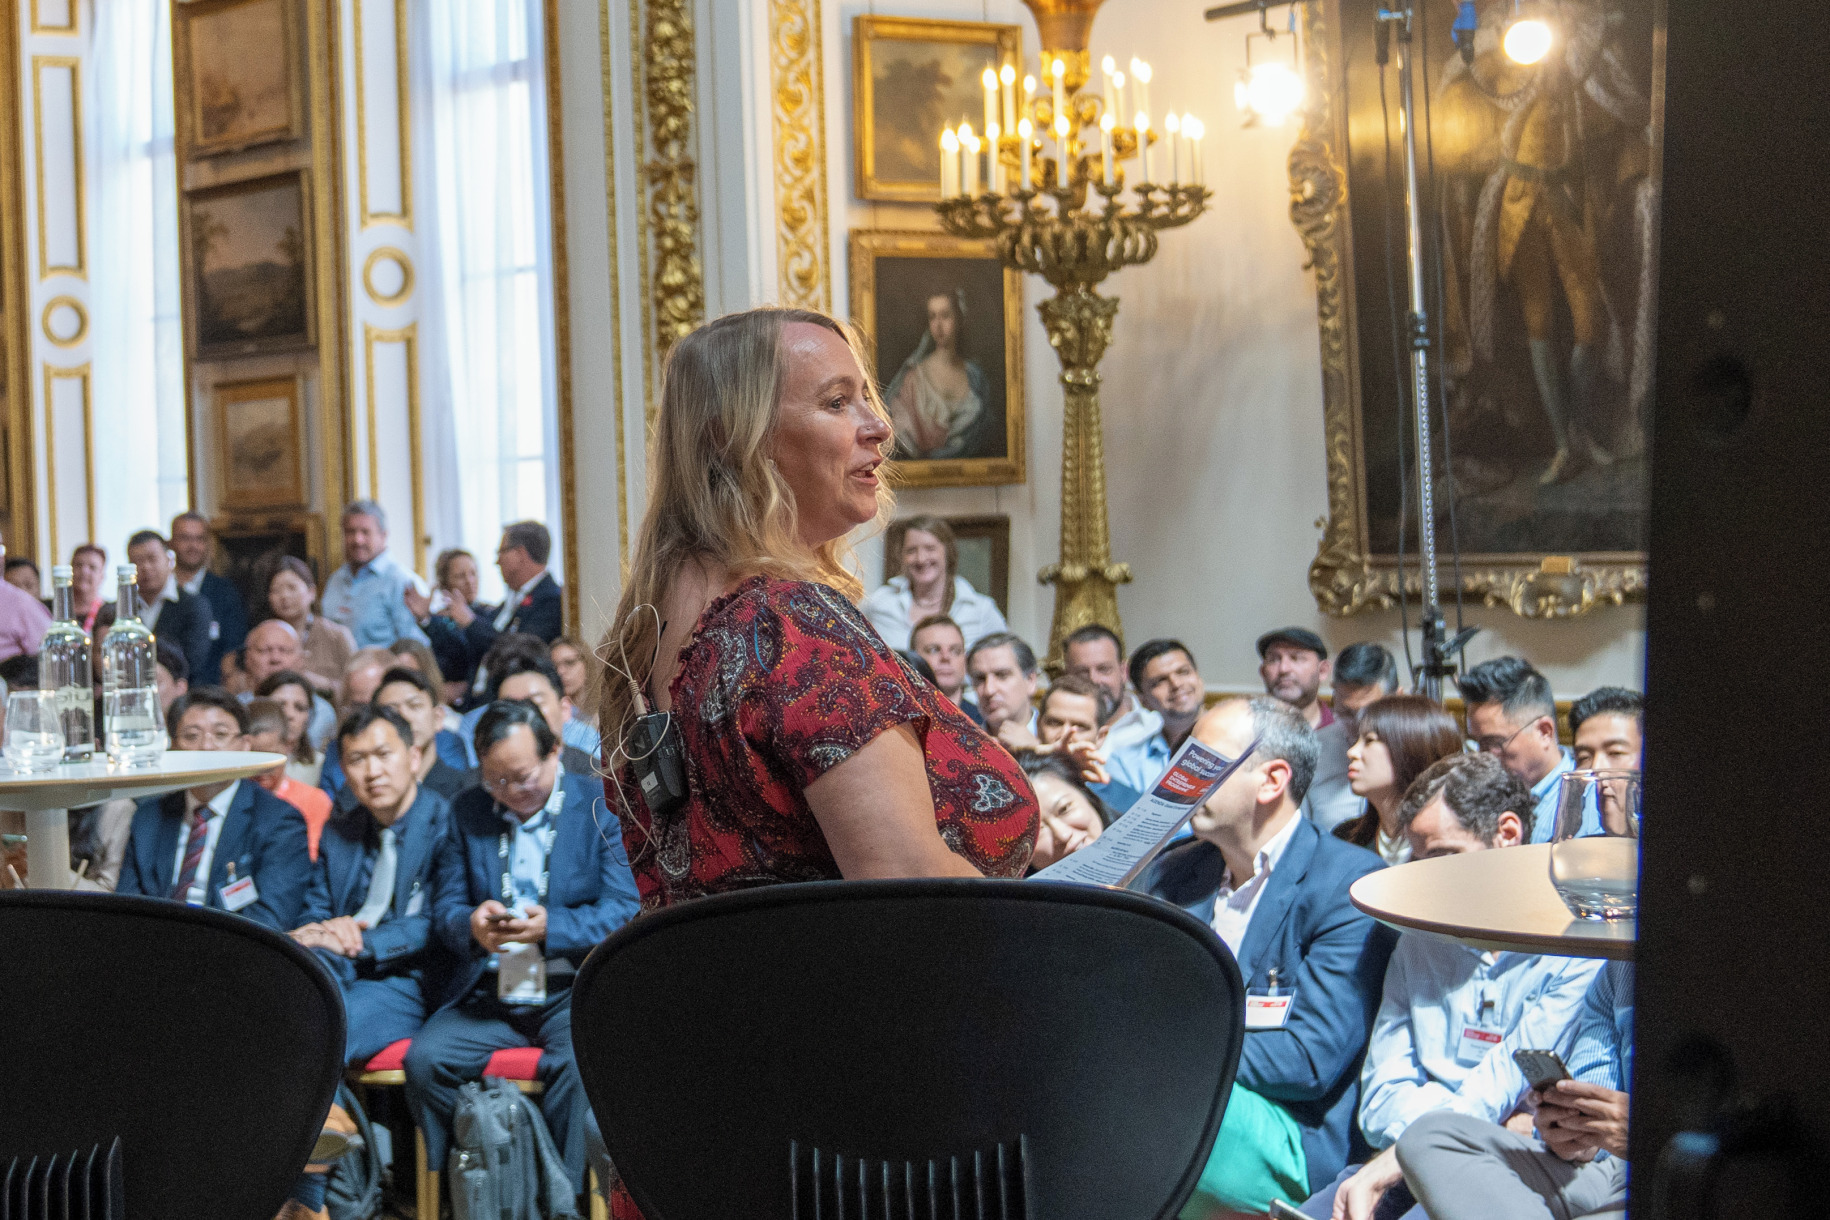 Addressing the delegates - Event host, Global Entrepreneur Programme's Michele Davidson-Jones